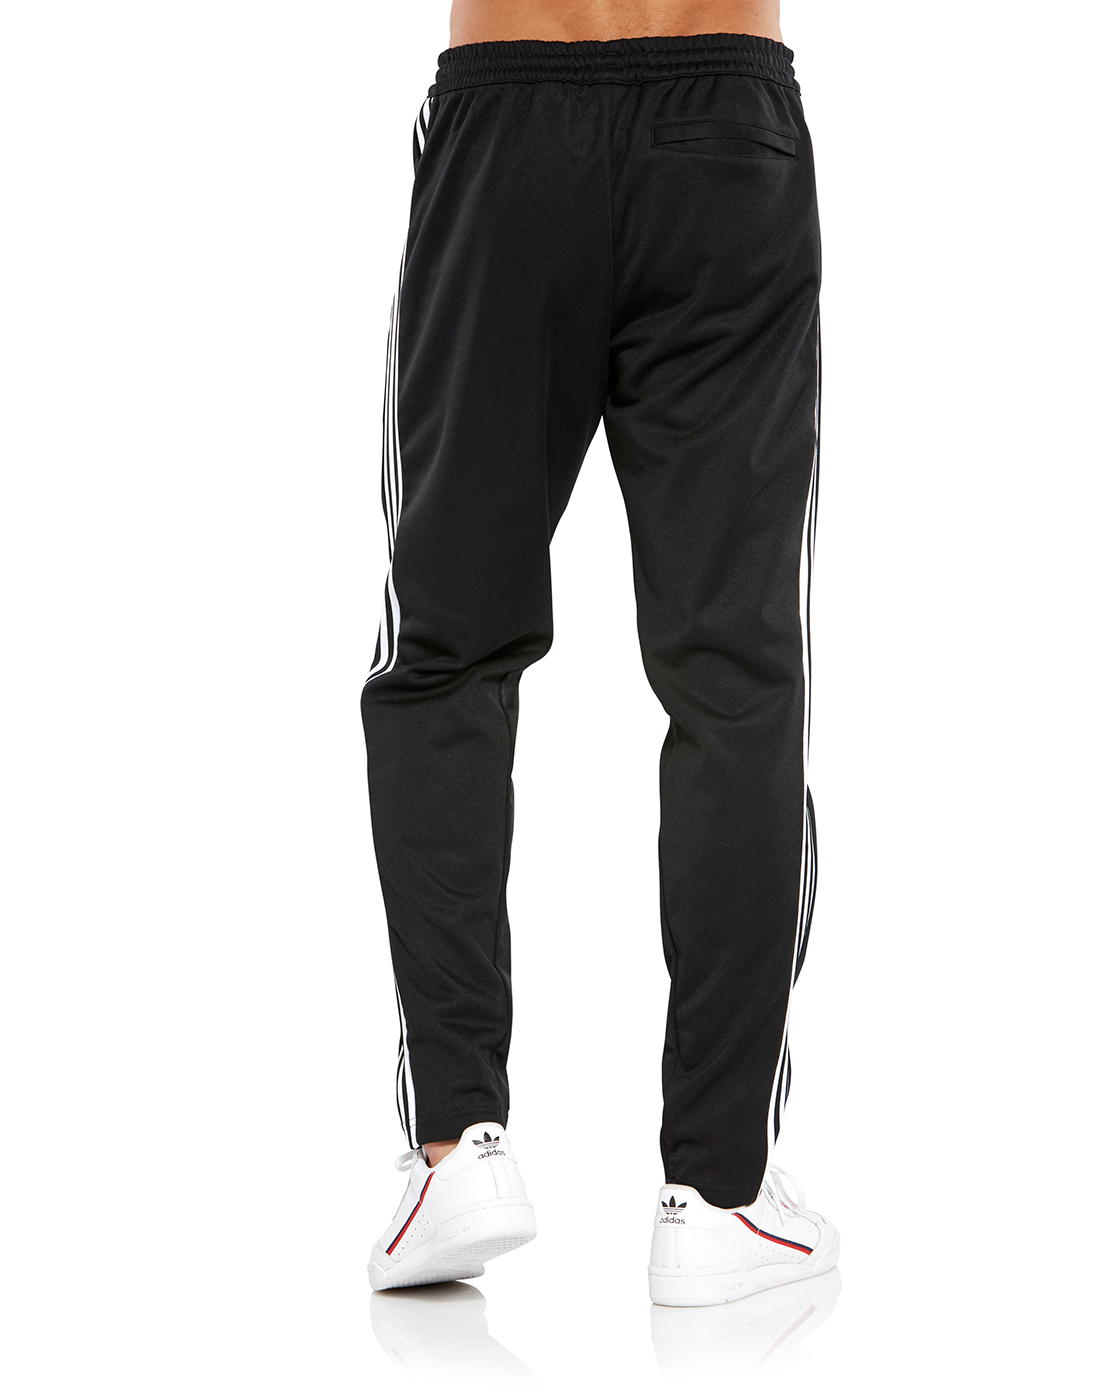 adidas Originals Mens Beckenbauer Track Pants - Black | Life Style ...